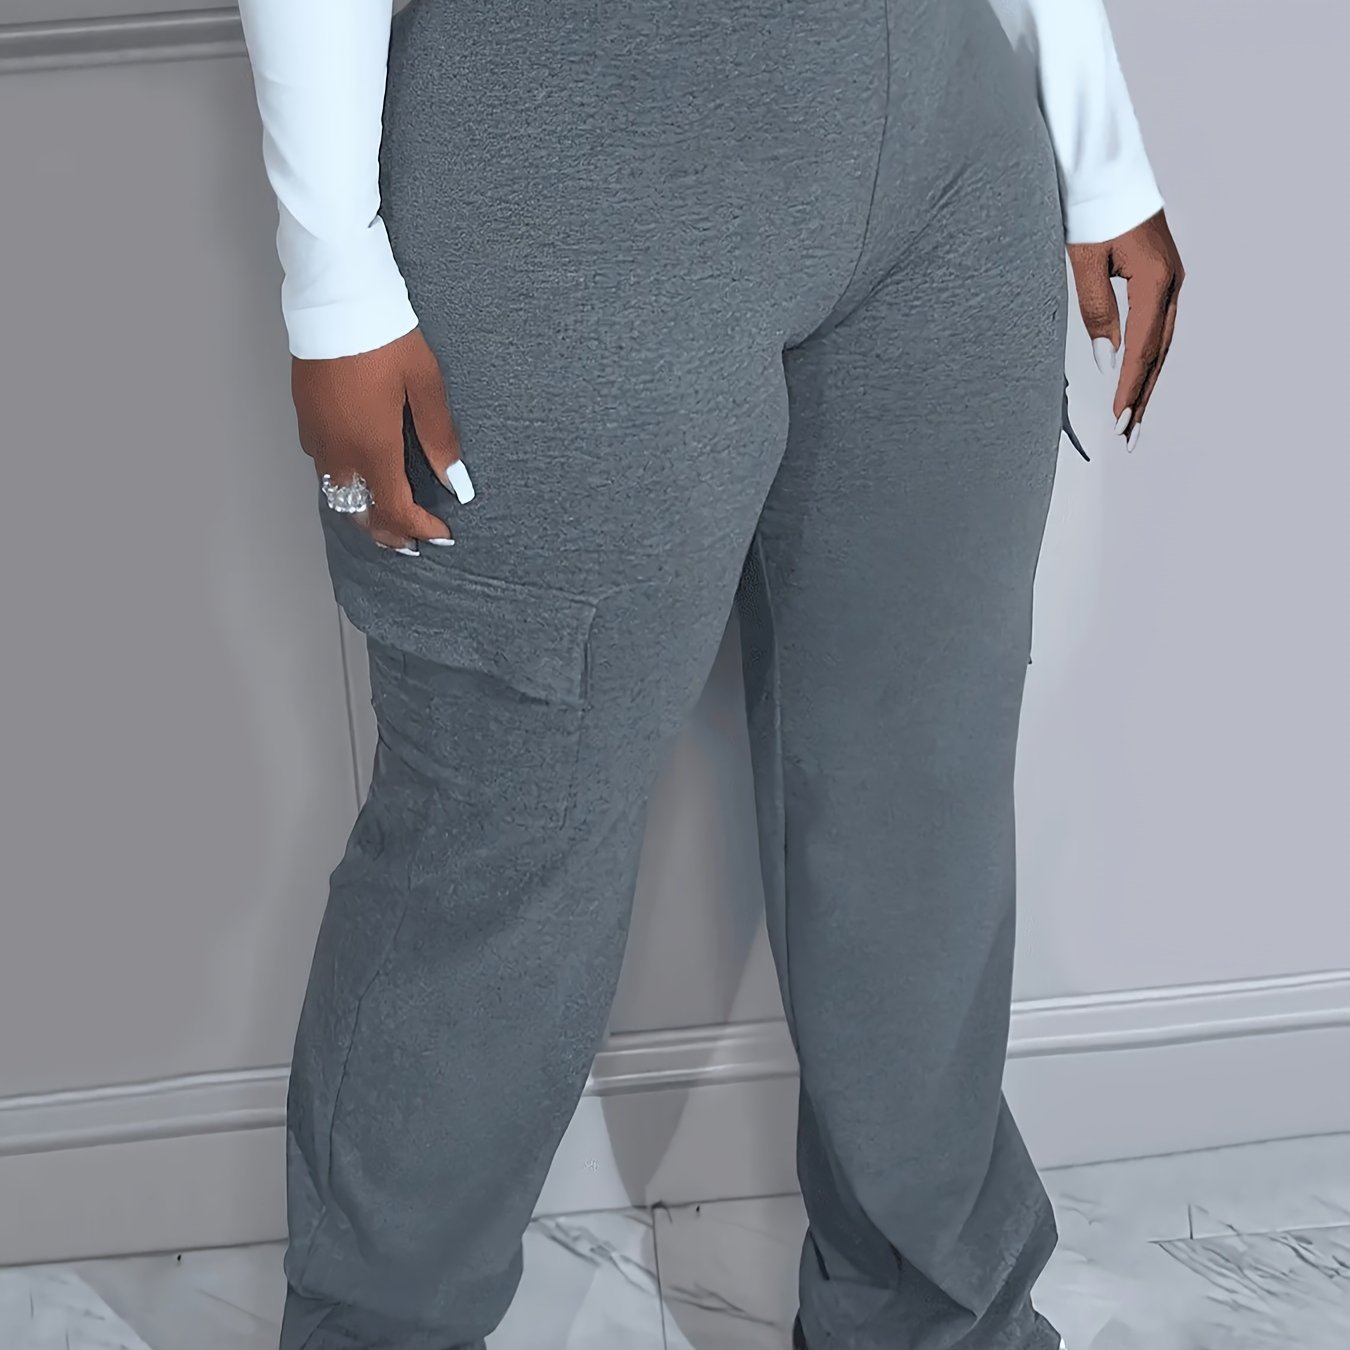 HSMQHJWE Womens Plus Size Clothing Elastic Waist Pants For Women